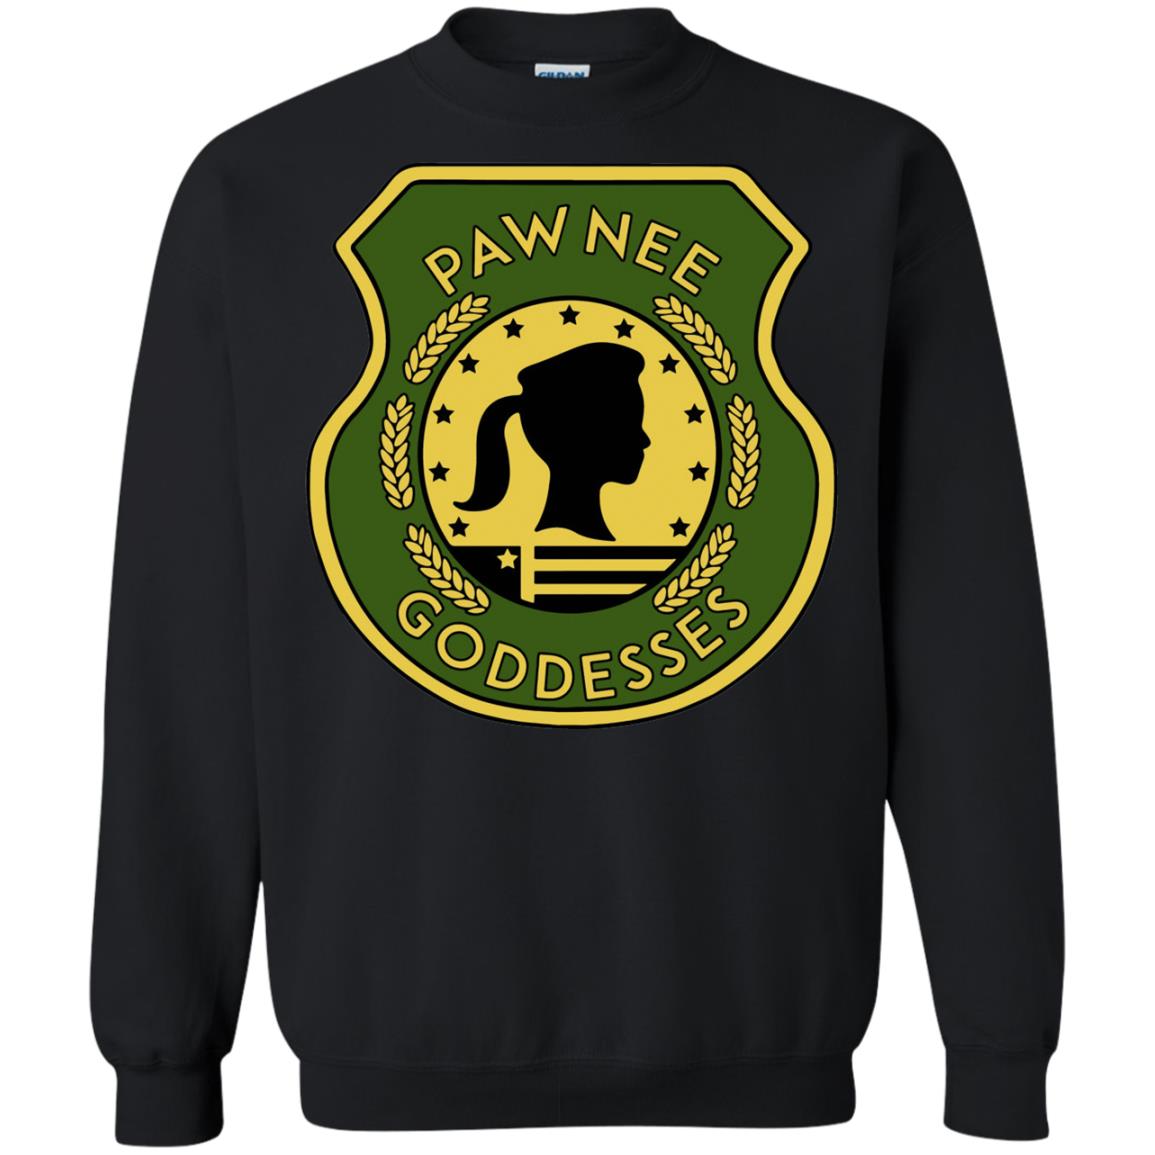 pawnee goddesses sweatshirt - black